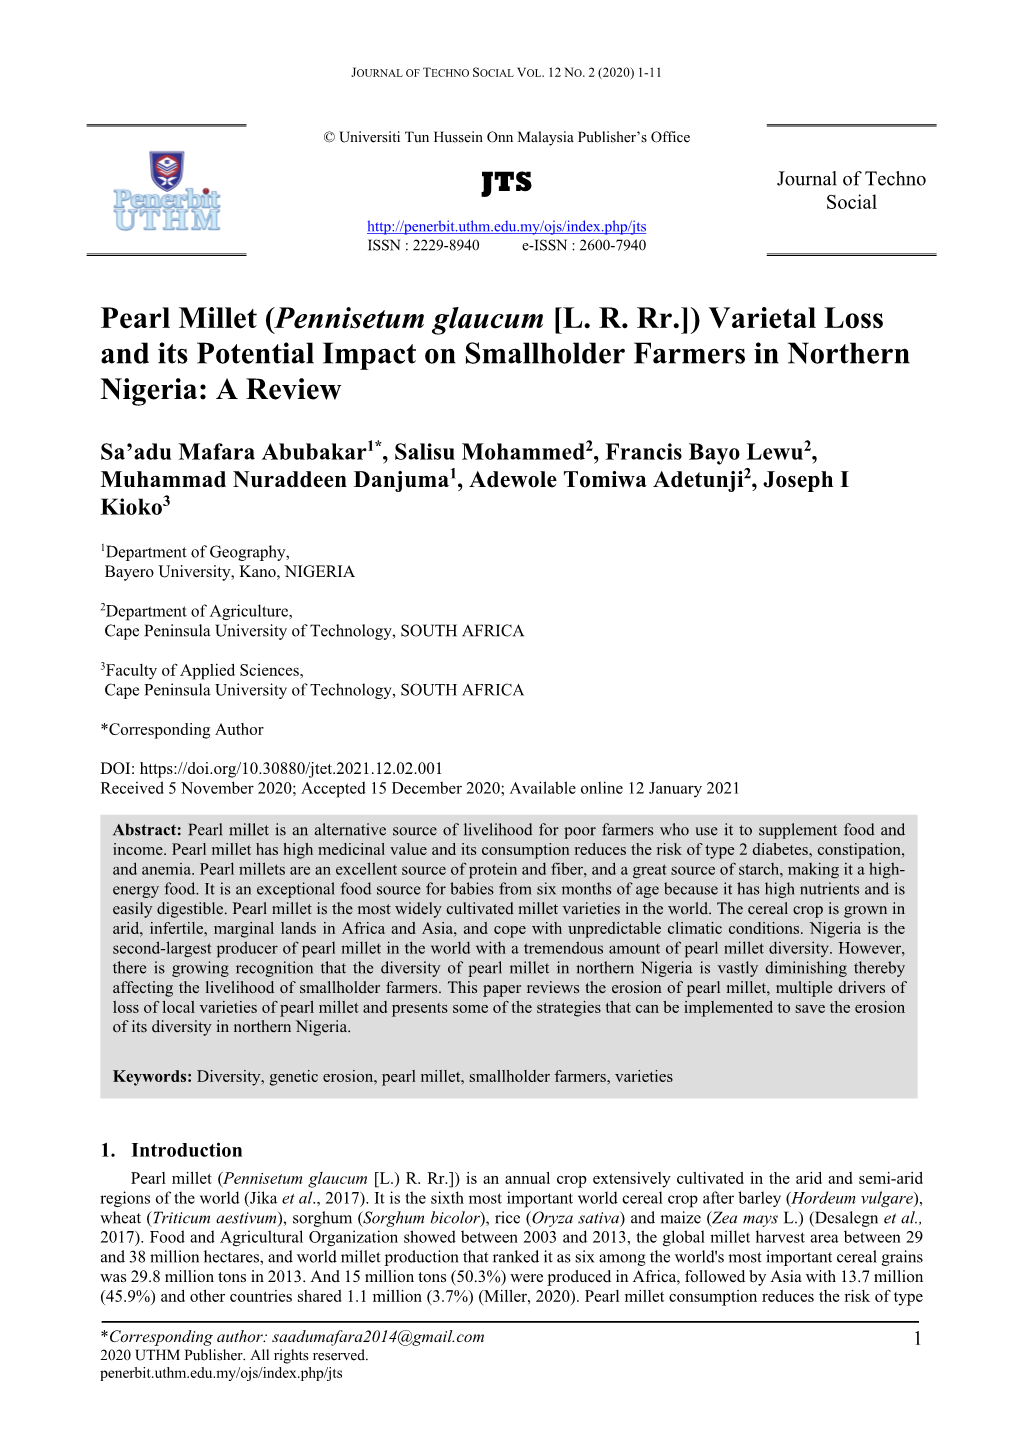 Pearl Millet (Pennisetum Glaucum [LR Rr.]) Varietal Loss and Its Potential